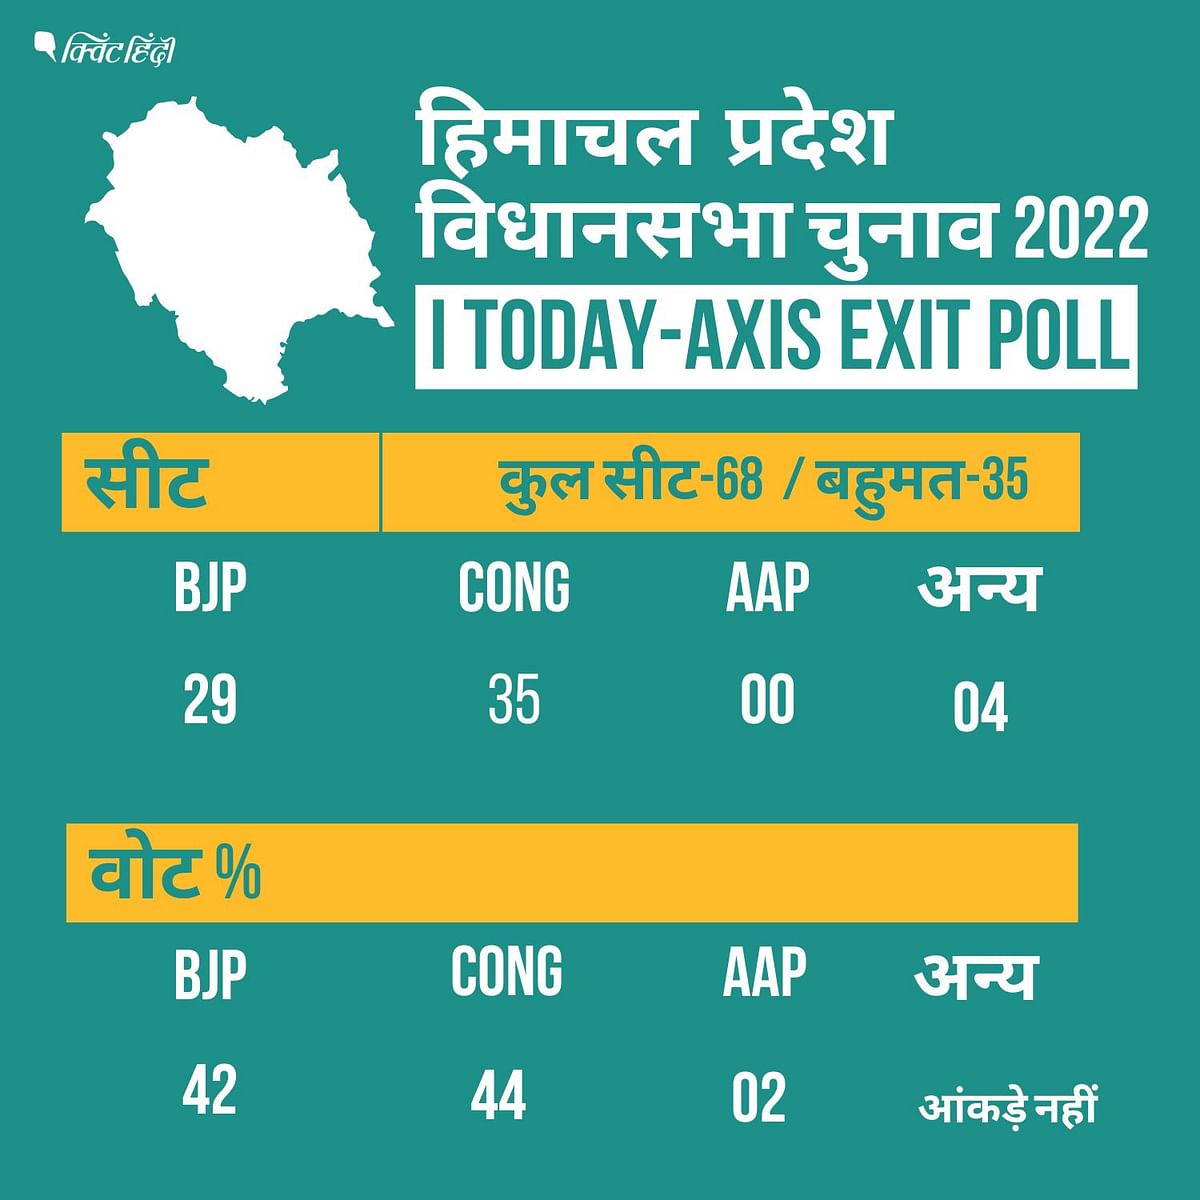 Himachal Pradesh Election India Today-Axis My India Exit Poll: बीजेपी को 42 प्रतिशत वोट, कांग्रेस को 44 फीसदी वोट